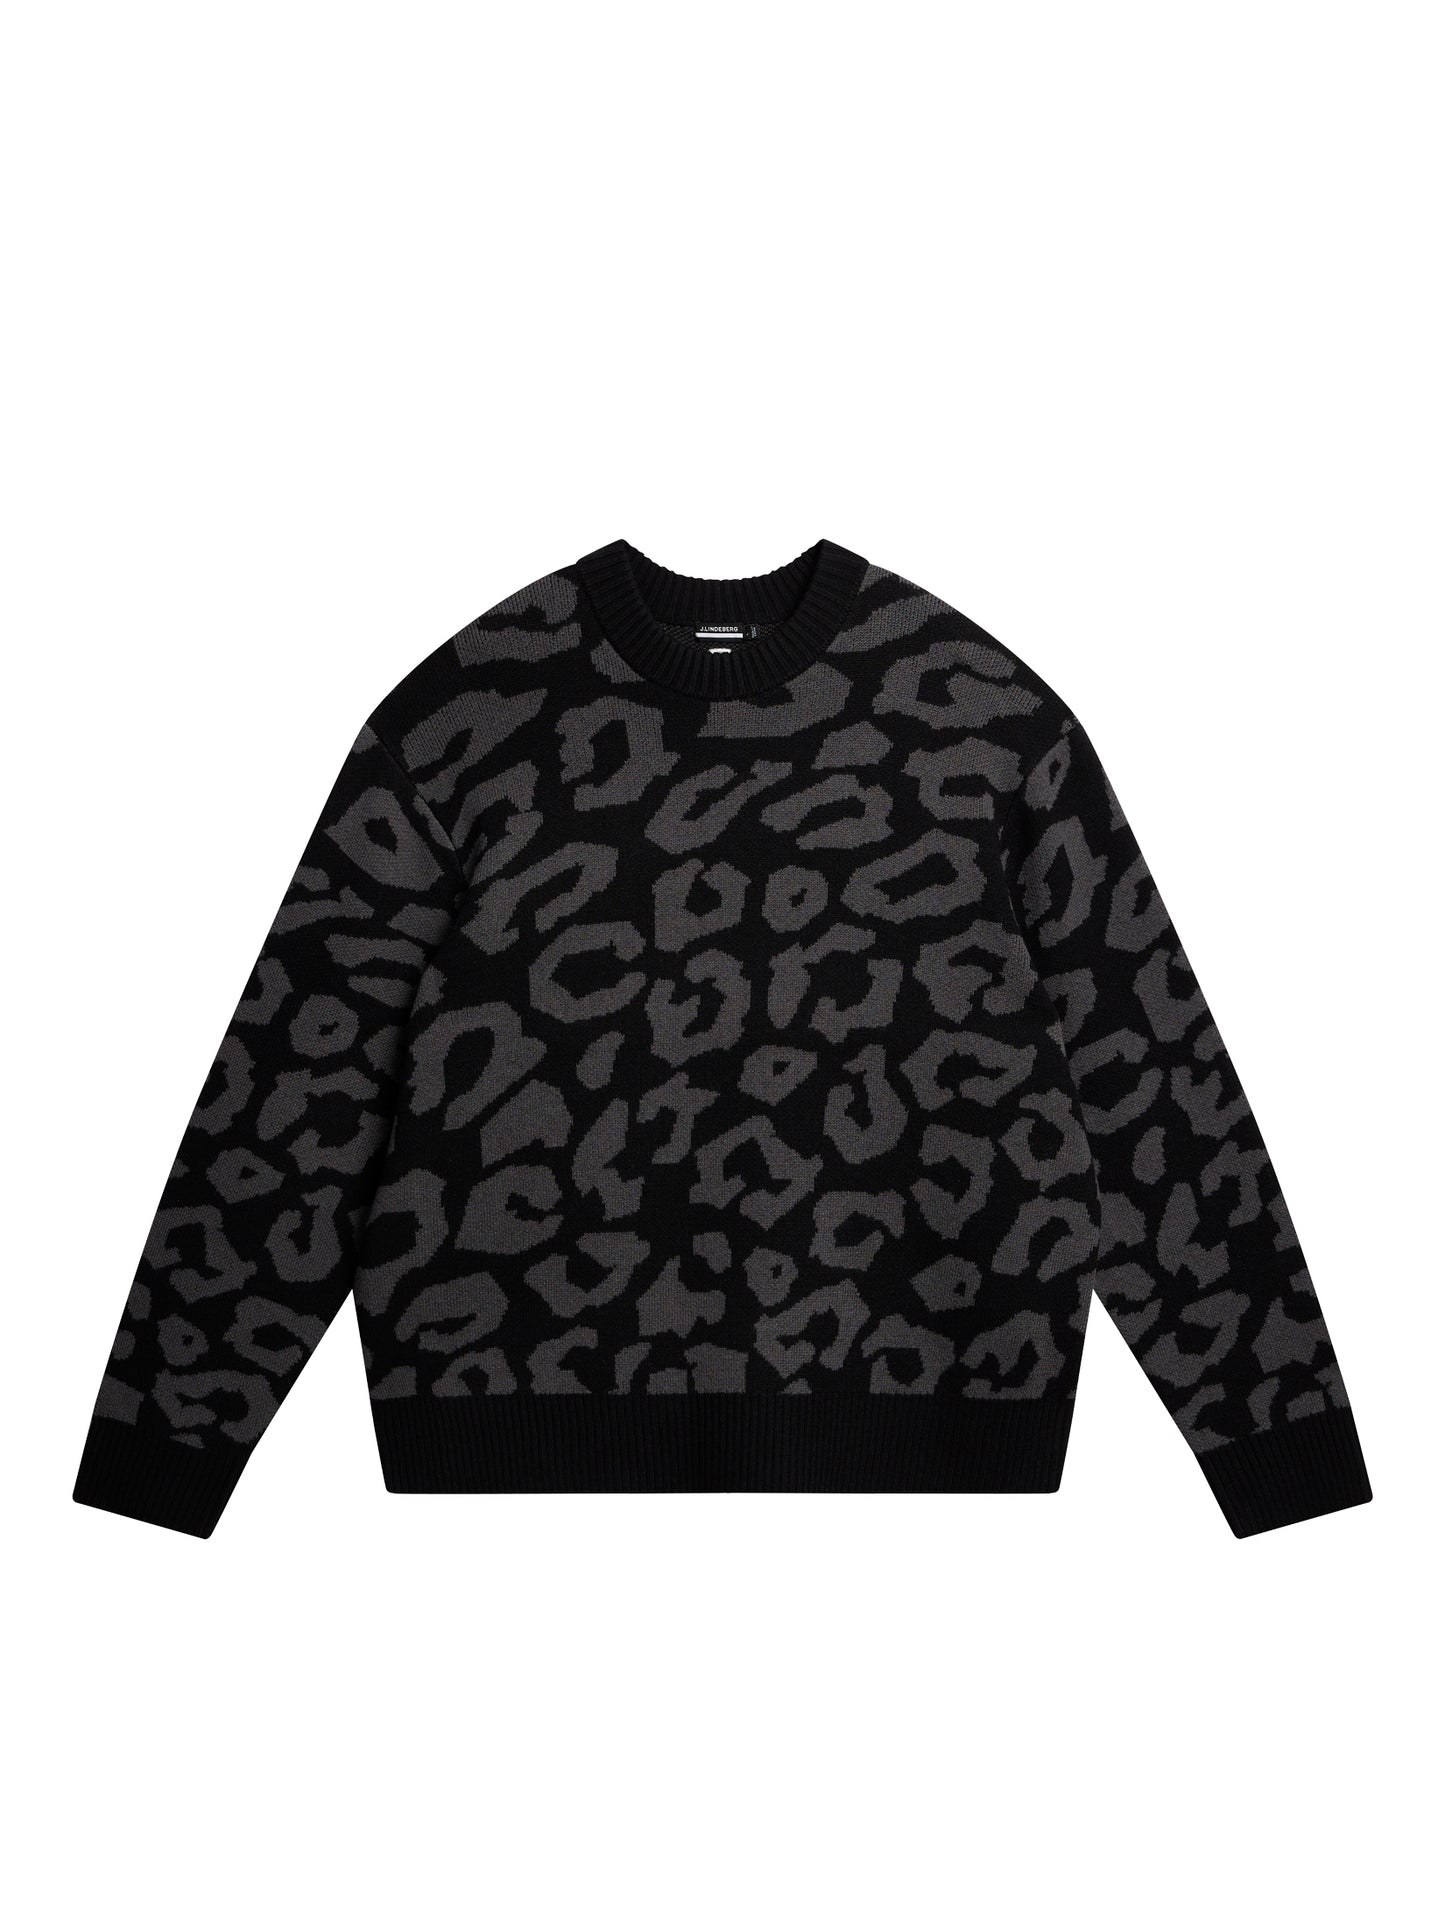 Black Leopard Crew Knit Sweater Black, Crew Knit Sweater